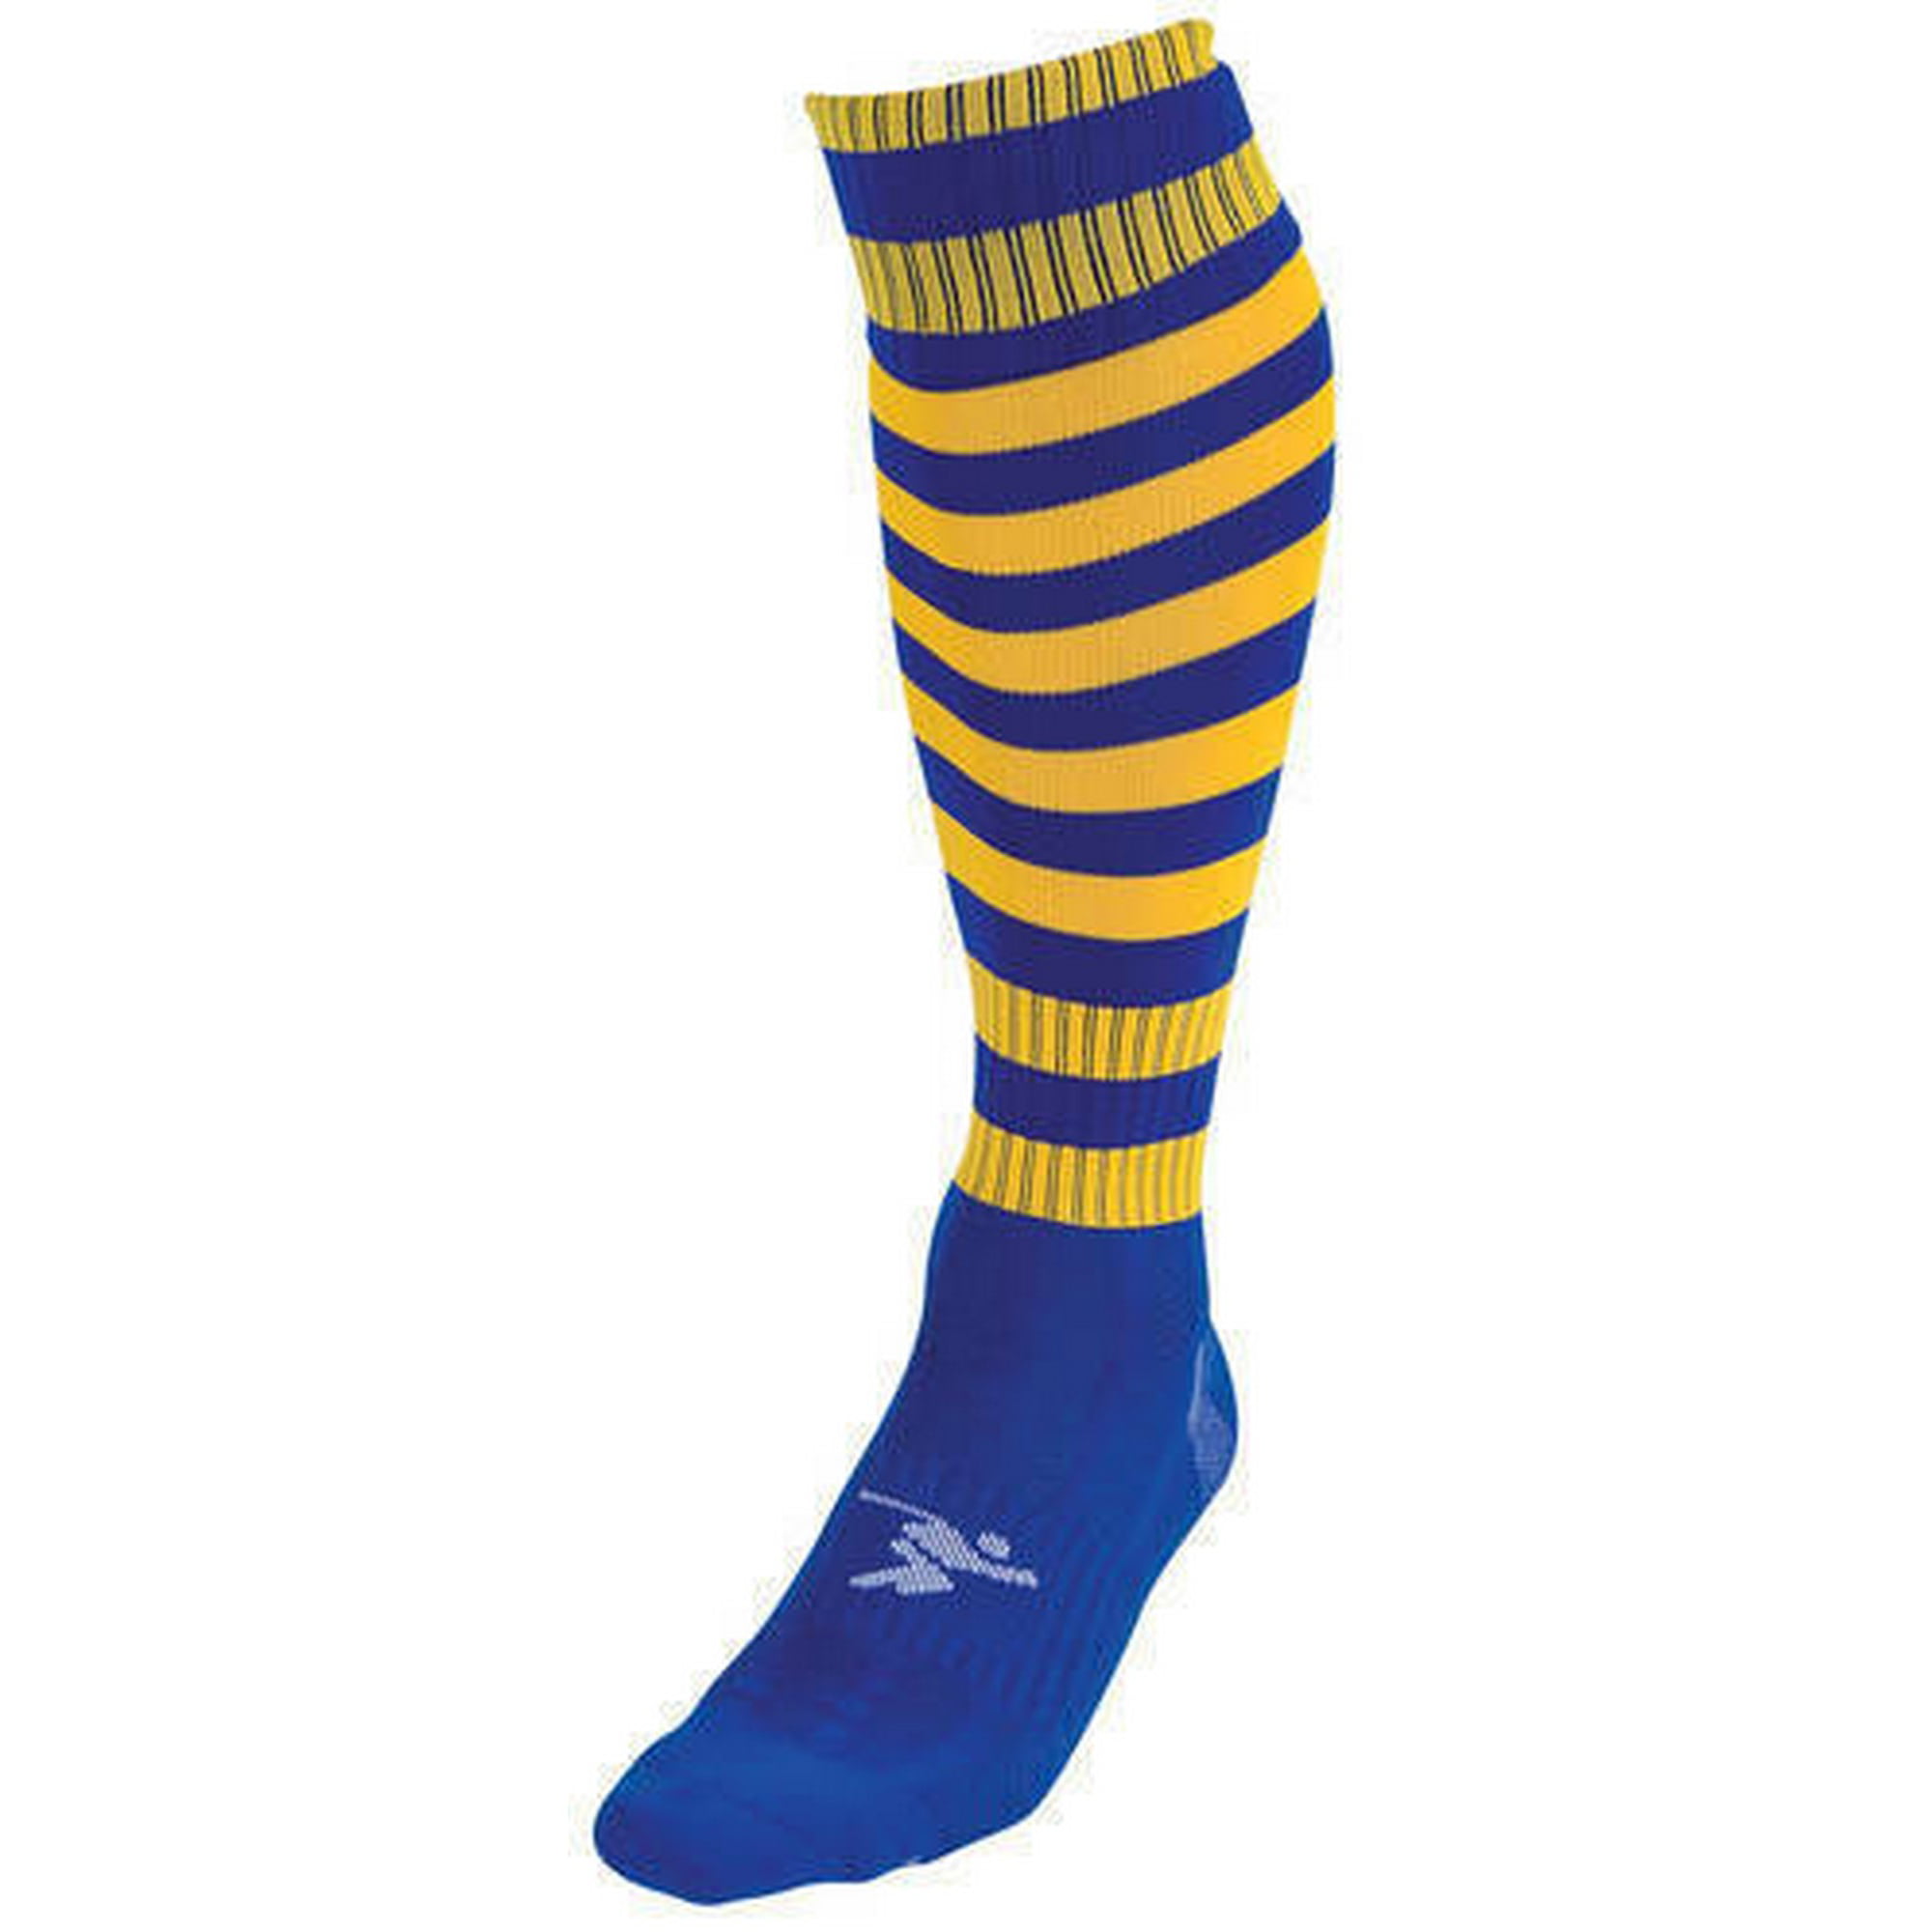 Precision Hooped Football Socks Mens Royal/Yellow